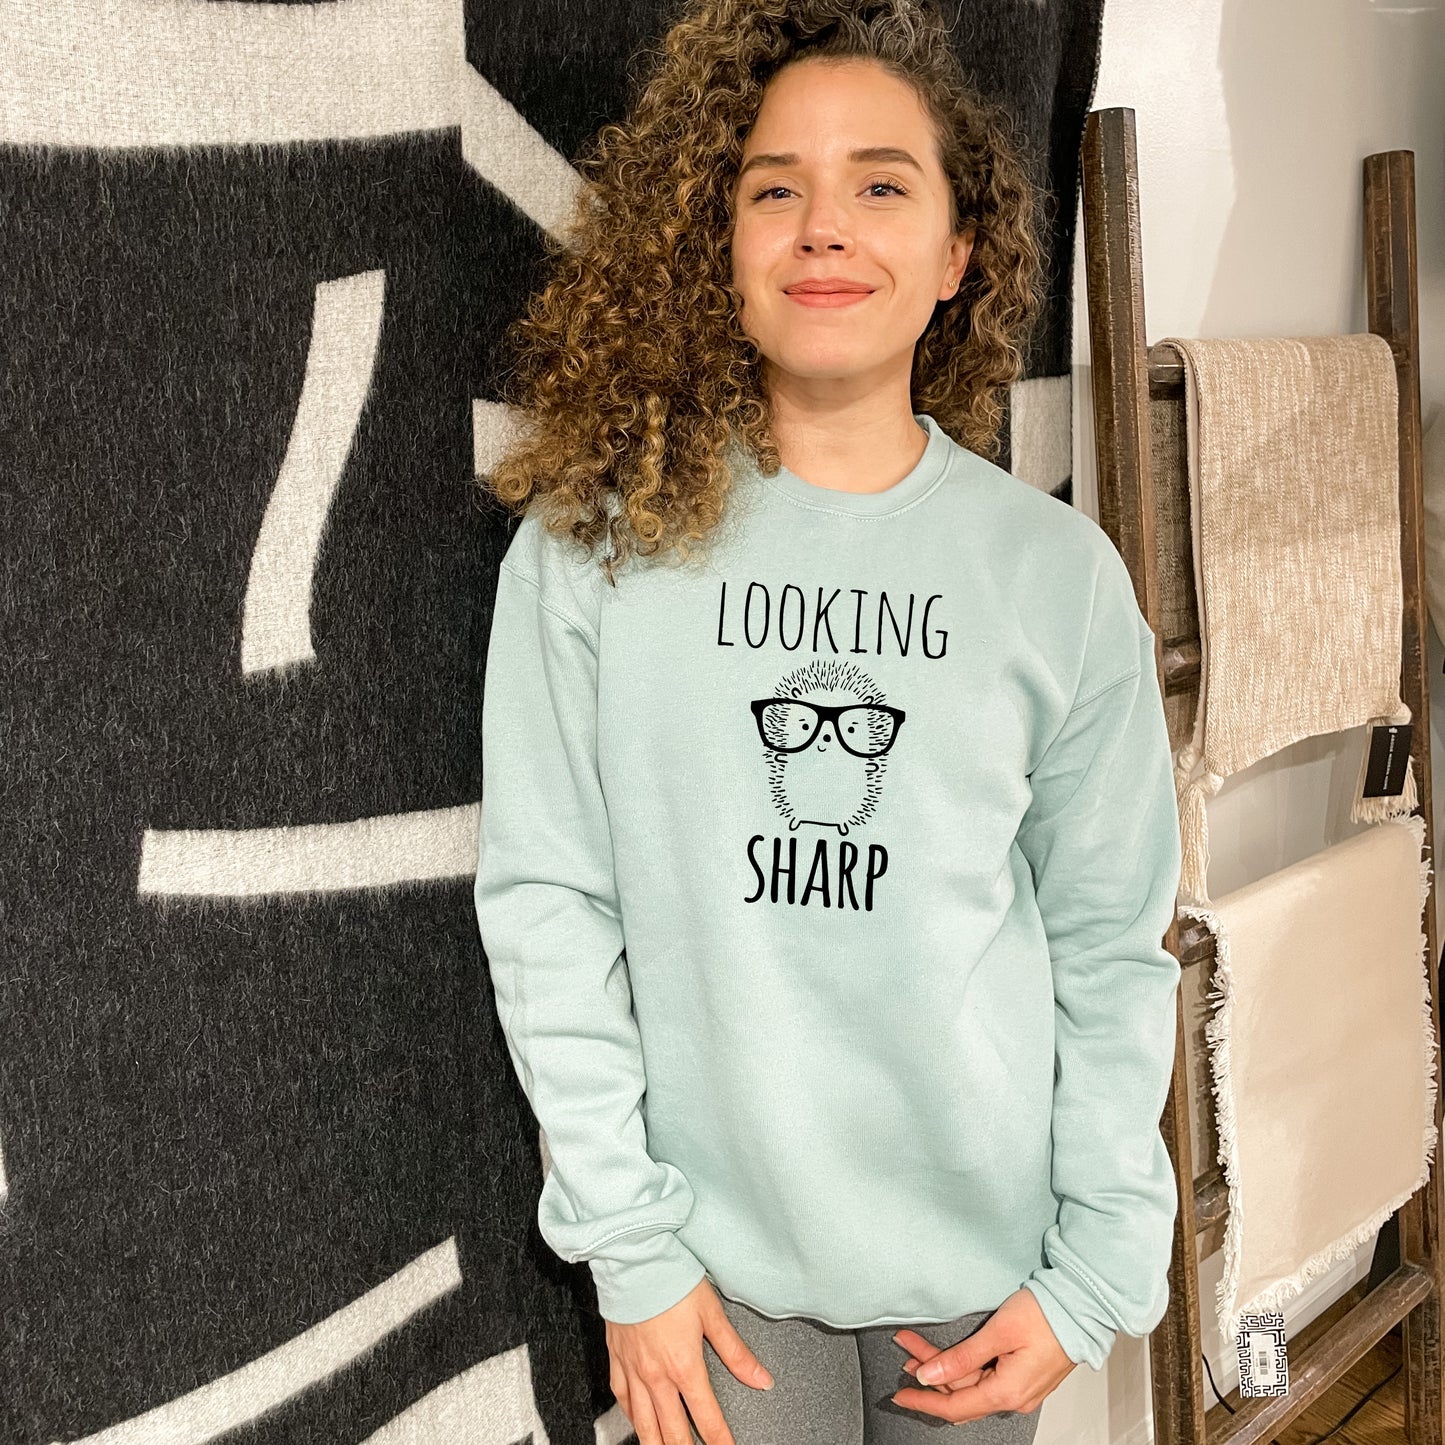 Looking Sharp (Hedgehog) - Unisex Sweatshirt - Heather Gray or Dusty Blue